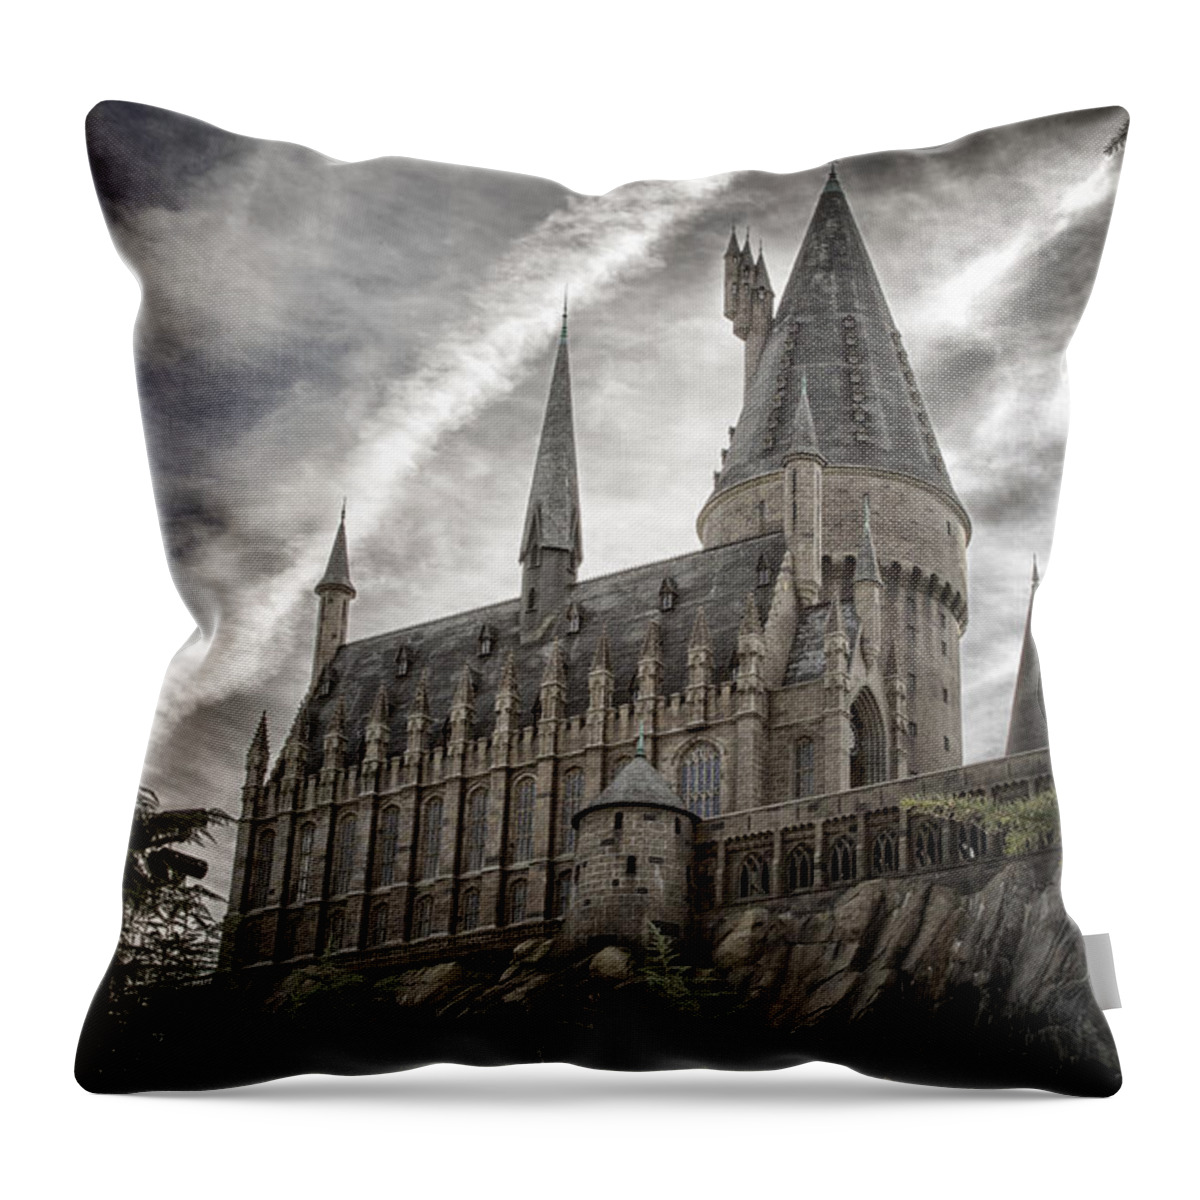 Orlando Throw Pillow featuring the photograph Hogwarts Castle by Linda Tiepelman